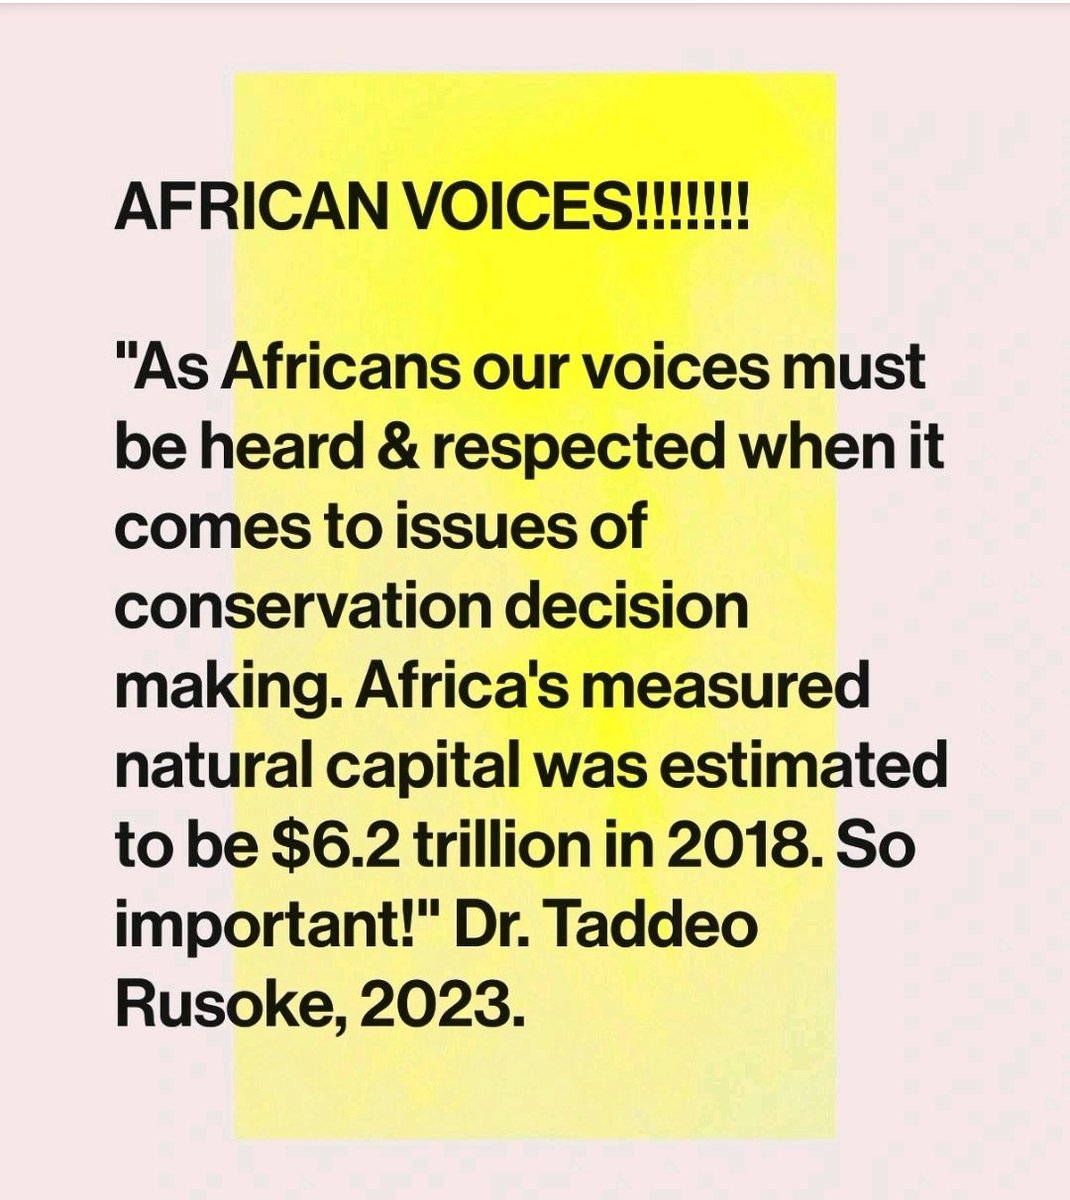 Listen to African Voices! @kabuniversity @NkumbaUni_News @8TechConsults @UNEP @AfricaKowanj @WildlifeClubsUg @ugwildlife @globalcompact @ABarirega @SustDev @NUP_Ug @Sdg13Un @UgandaUncovered @WildlifeEconomy @AfricanIIJ @TPC_Africa @AAU_67 @AfricaNoTobacco @jumuiya